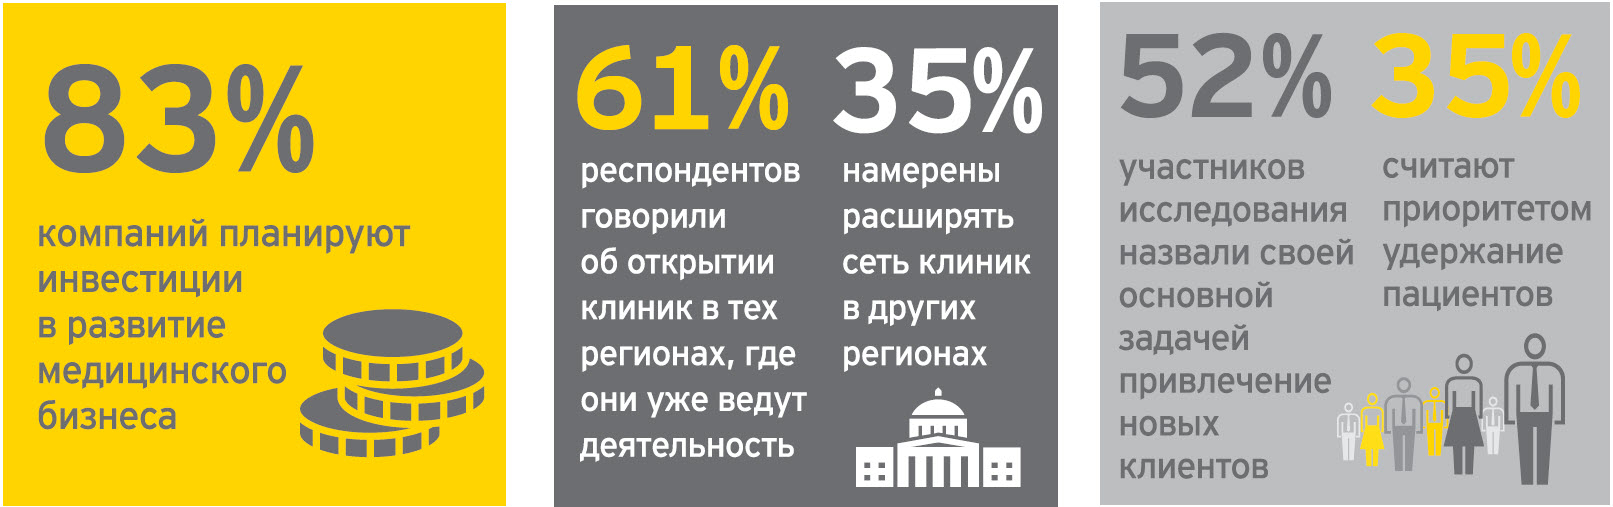 ey-russia-healthcare-report-2015-2